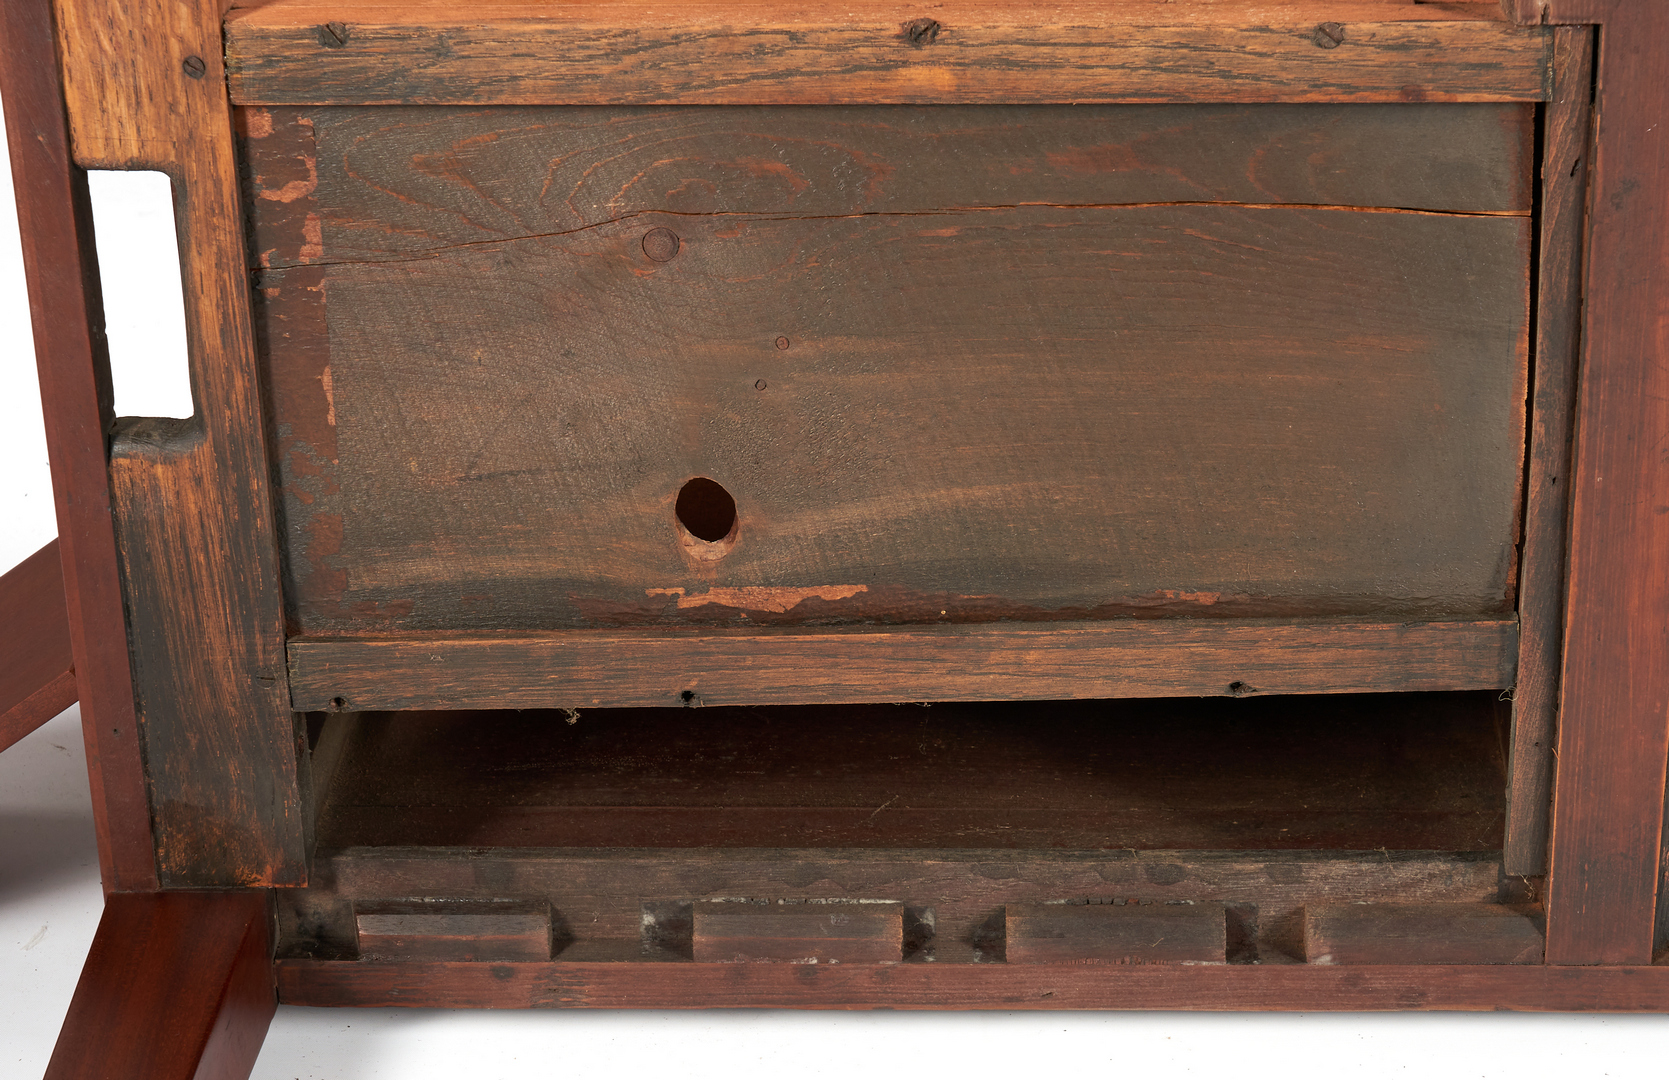 Lot 163: English 19th C. Mahogany Sideboard w/ Hidden Compartment